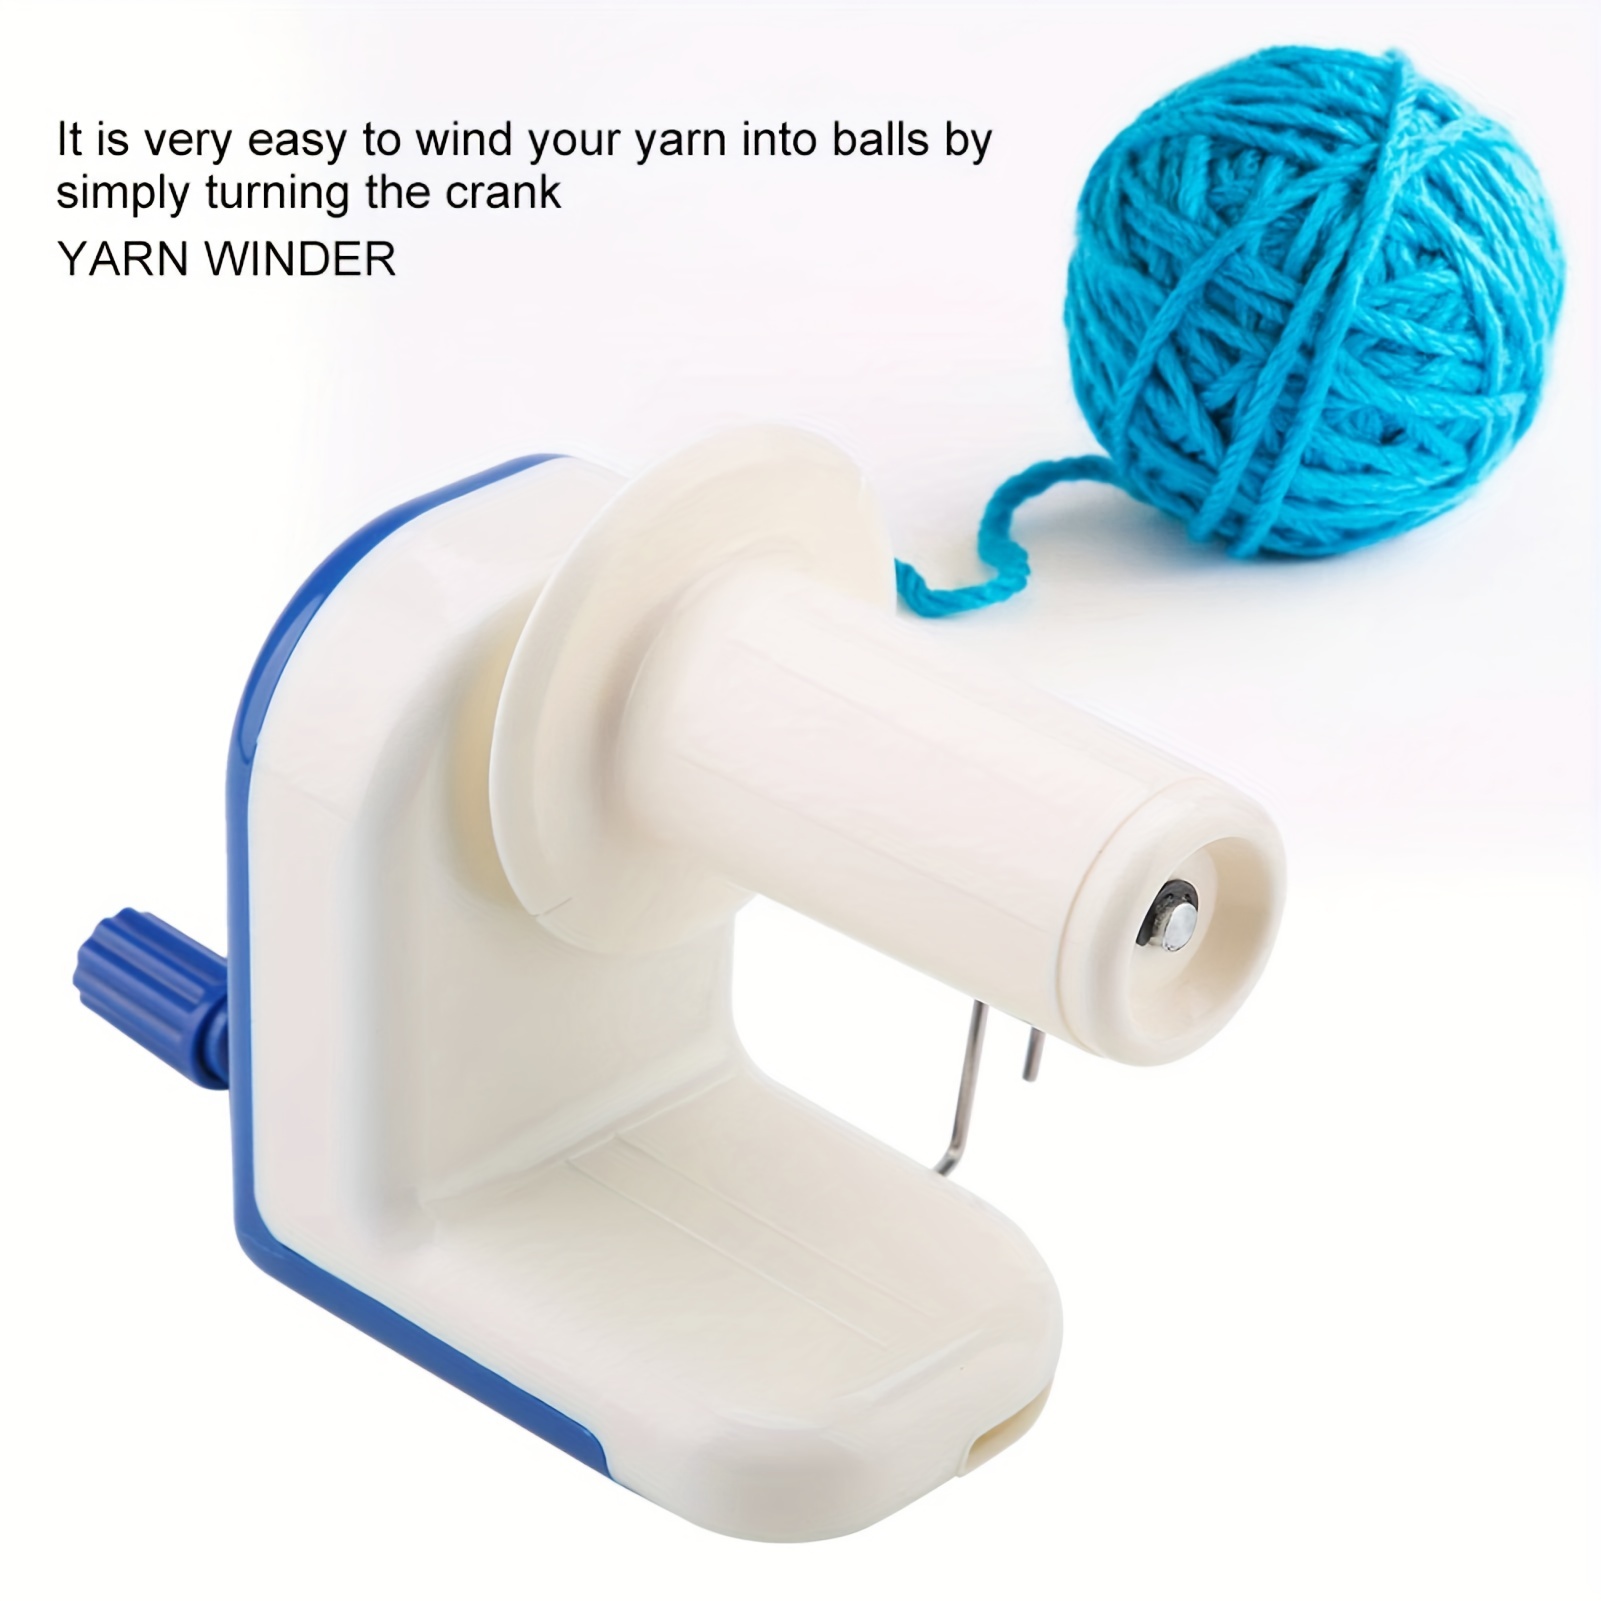 Yarn Ball Winder - Knitting Notions